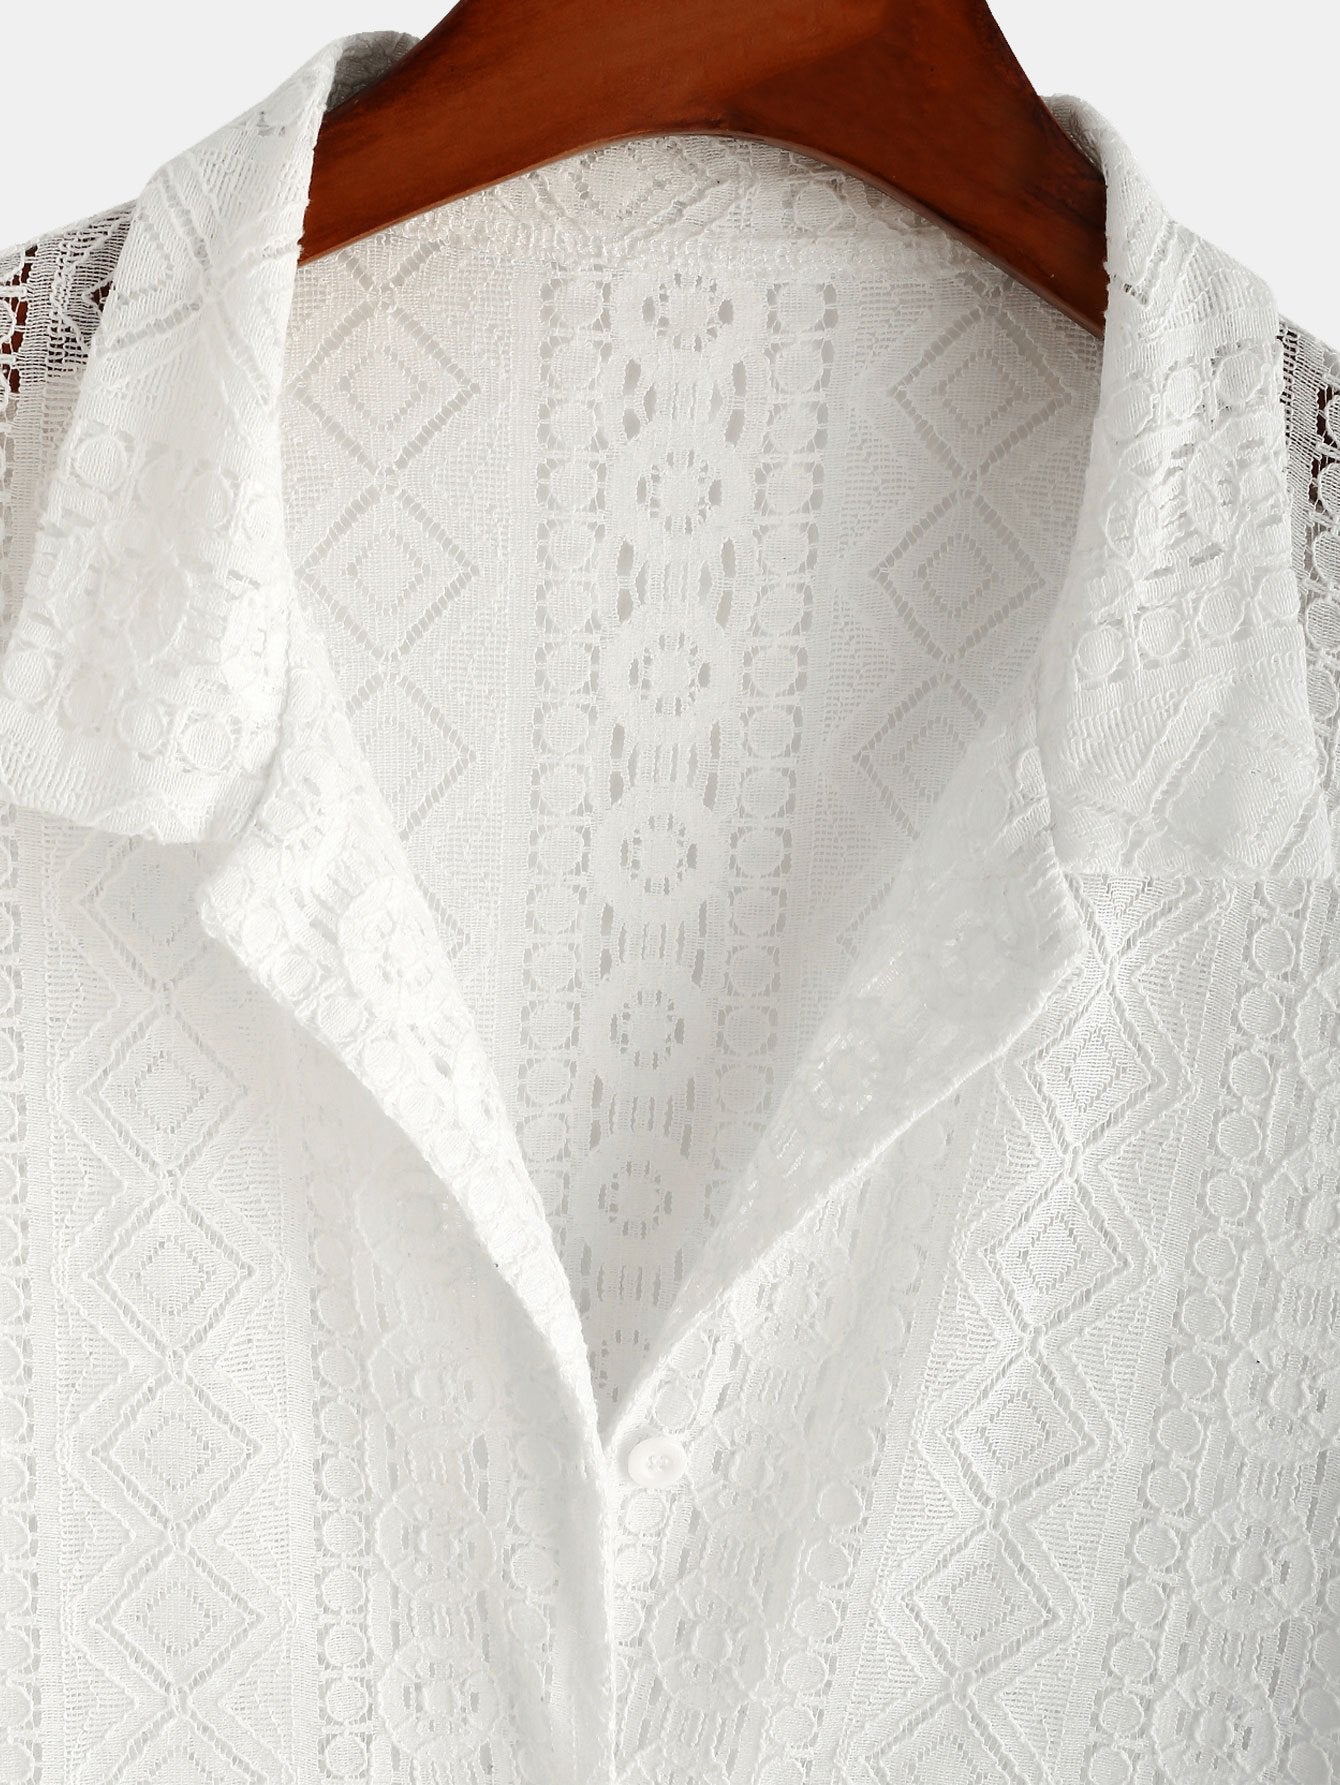 Geometry Textured Cuban Shirt